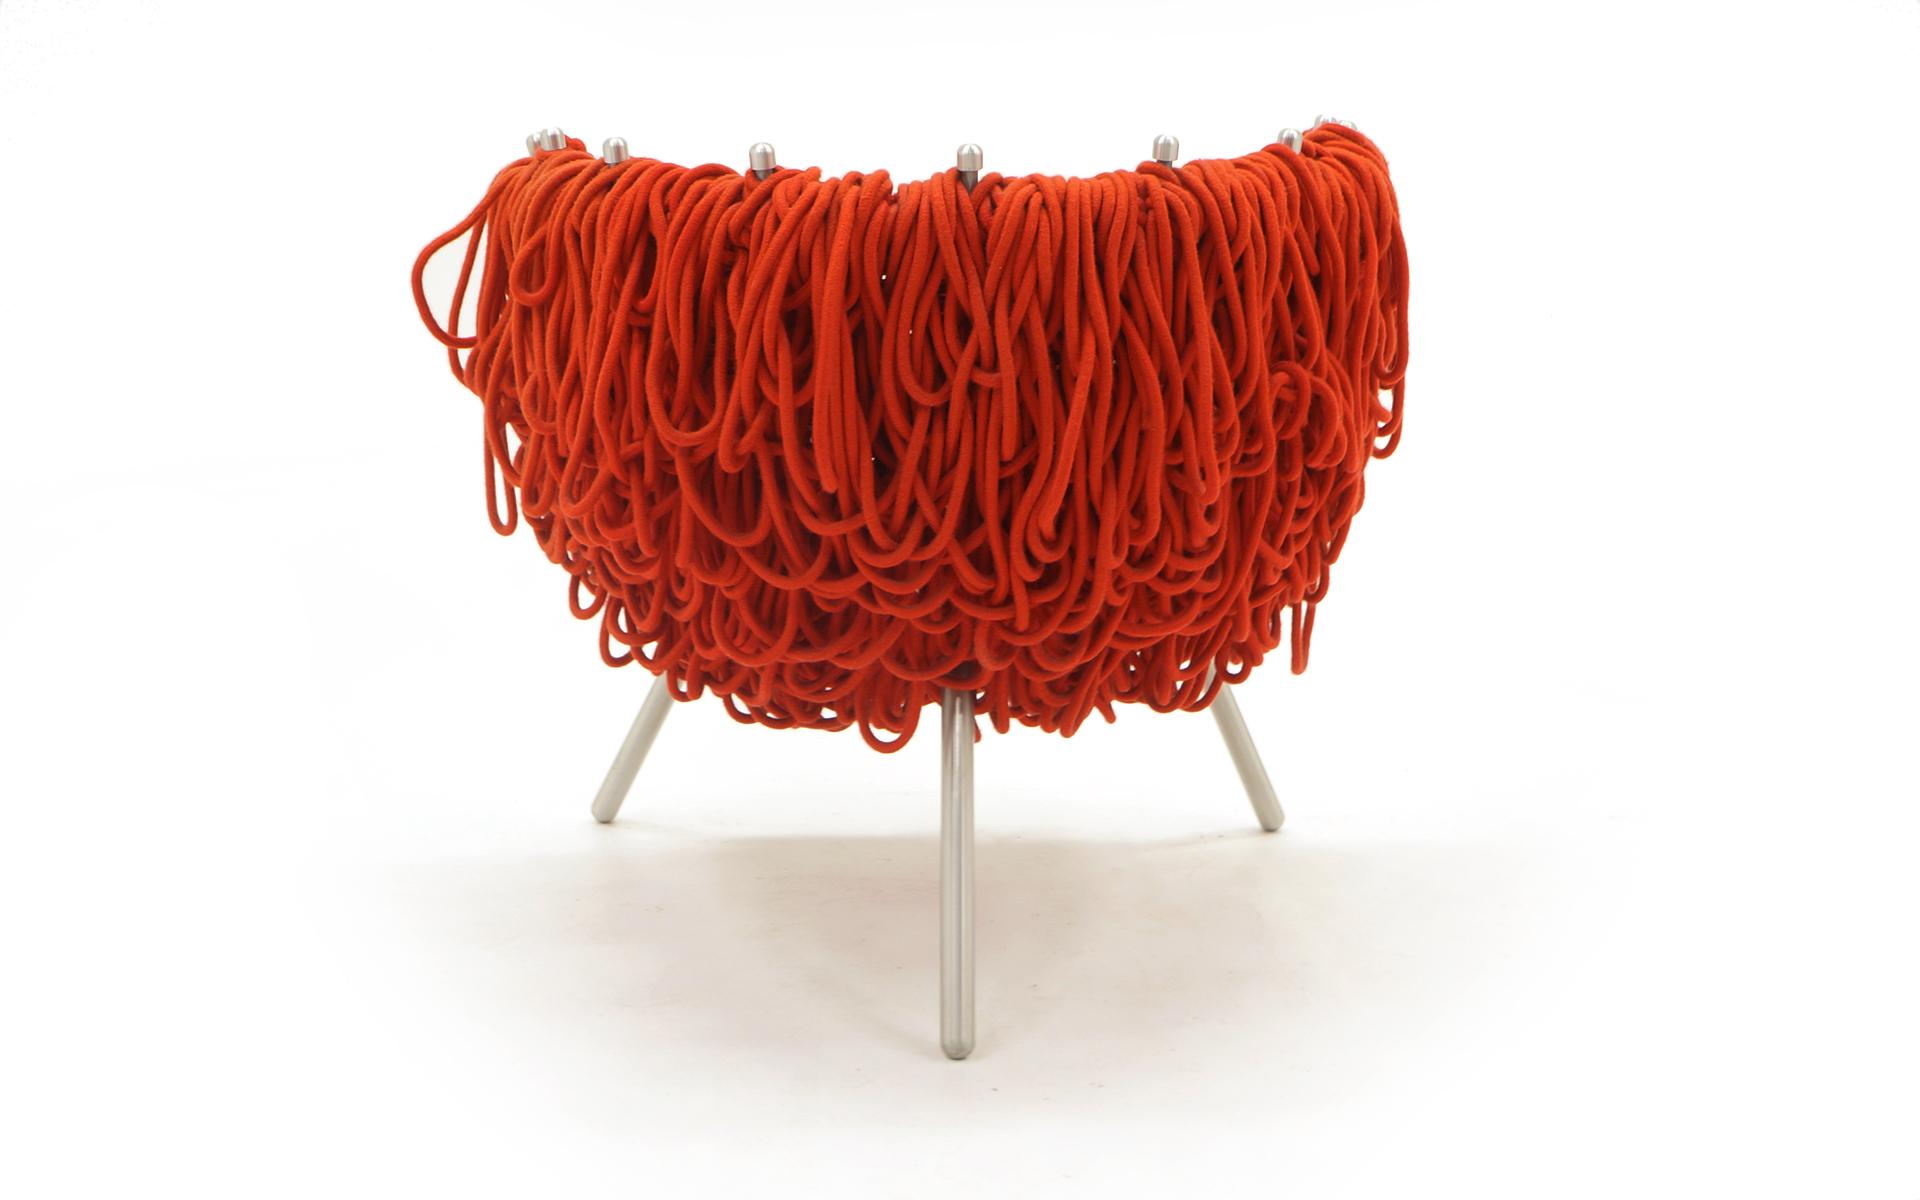 Post-Modern Vermelha Chair by Fernando and Humberto Campana for Edra, Red Rope, Aluminum